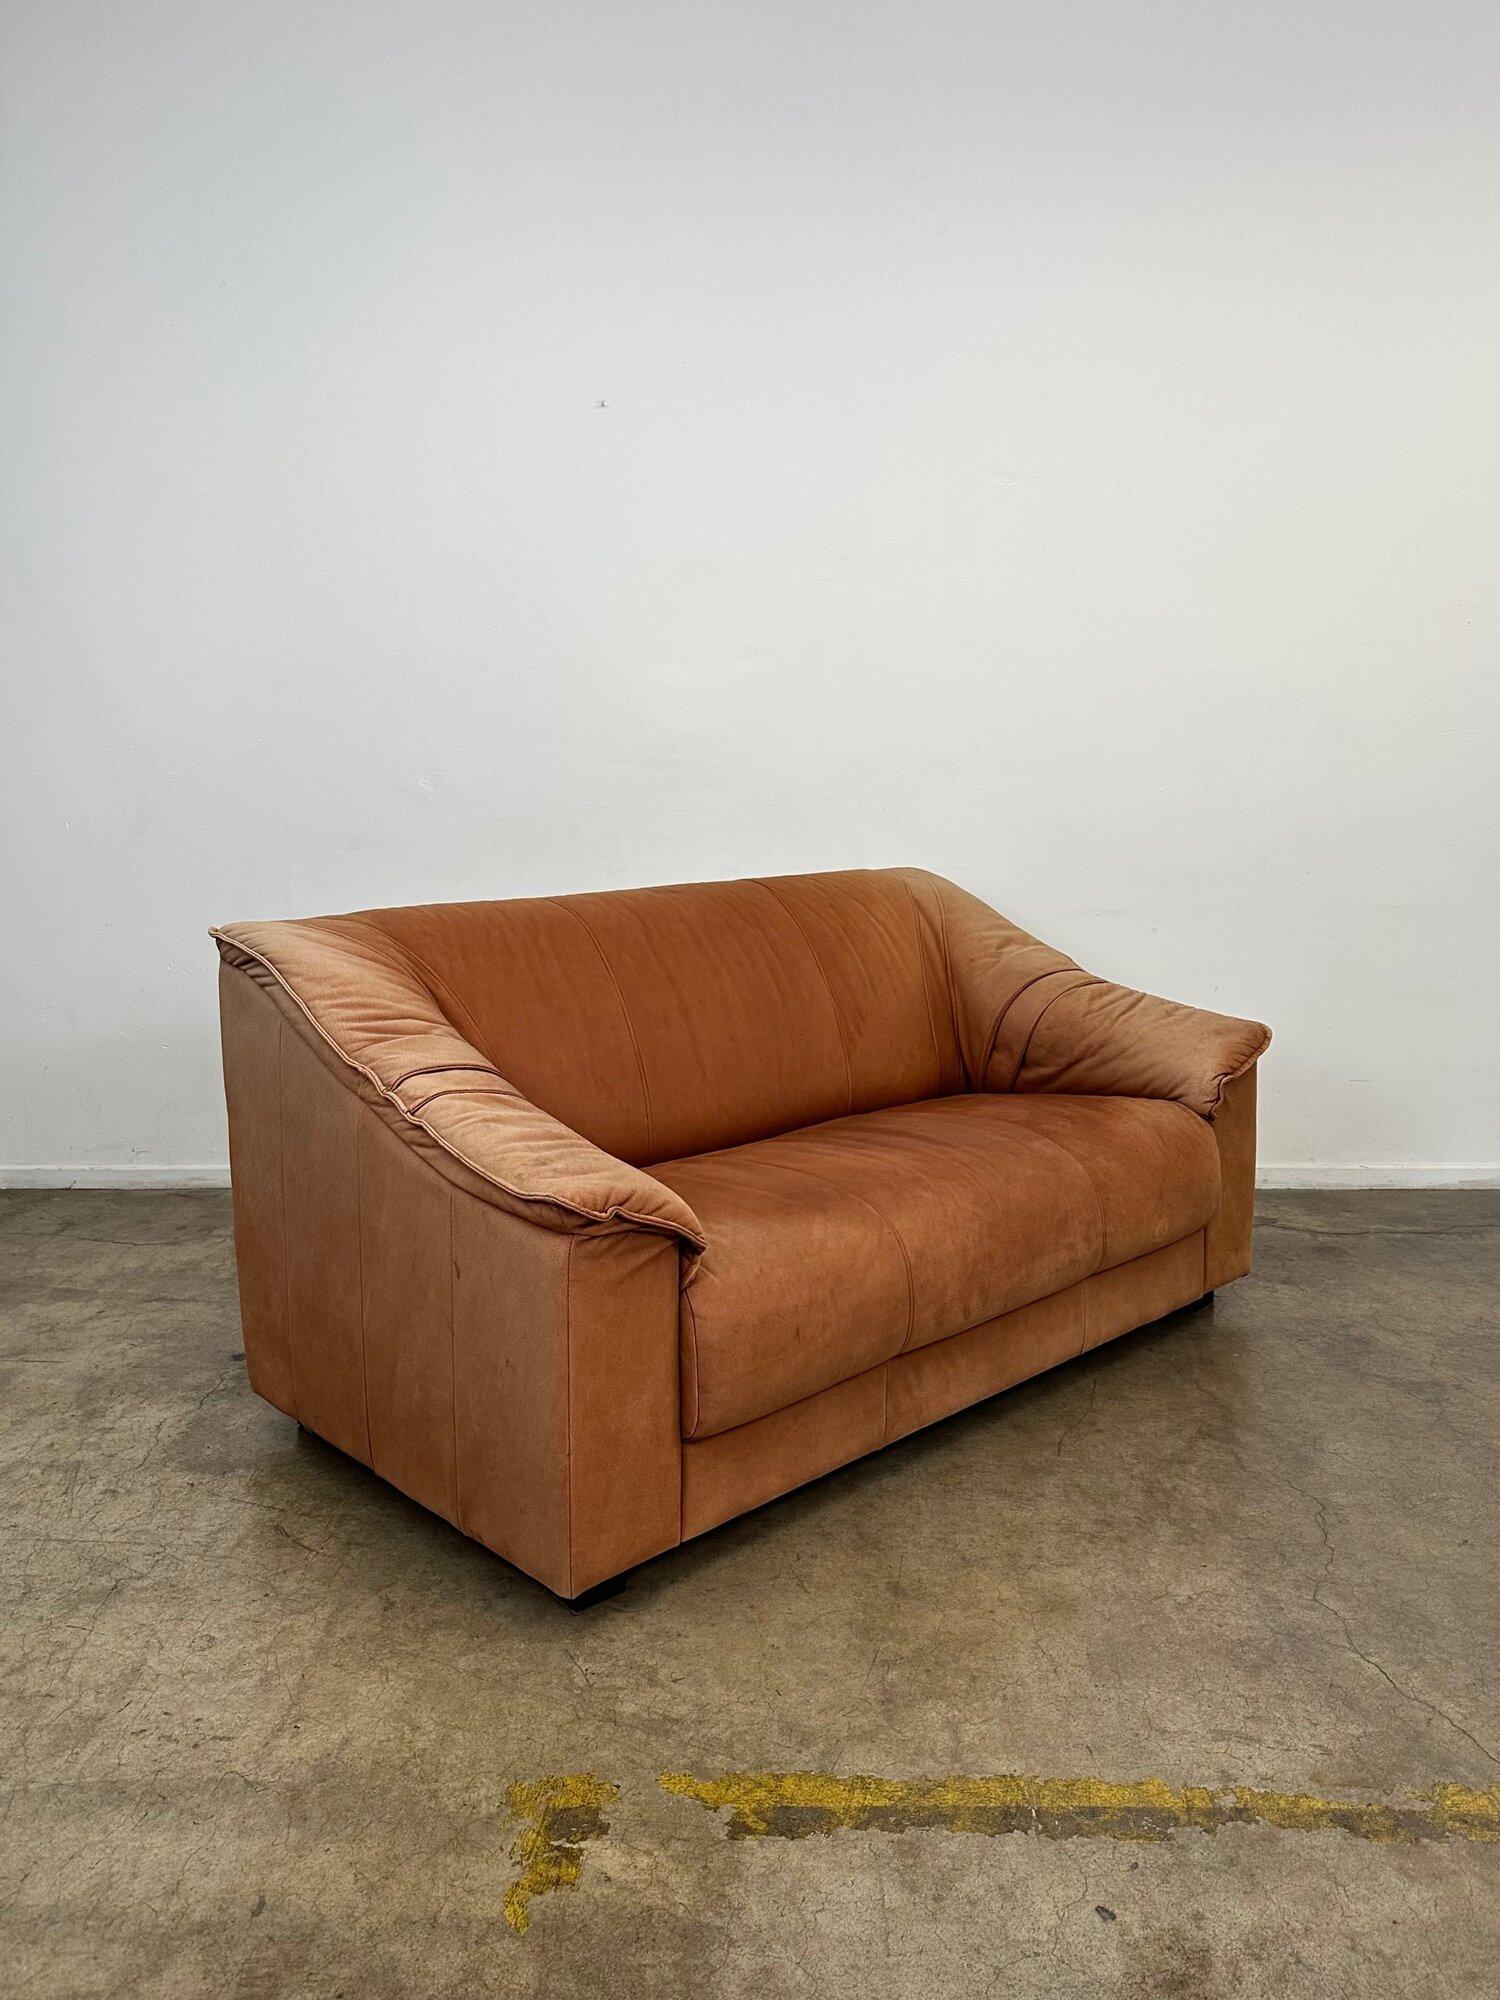 Late 20th Century Ikea Halland post modern patchwork sofa